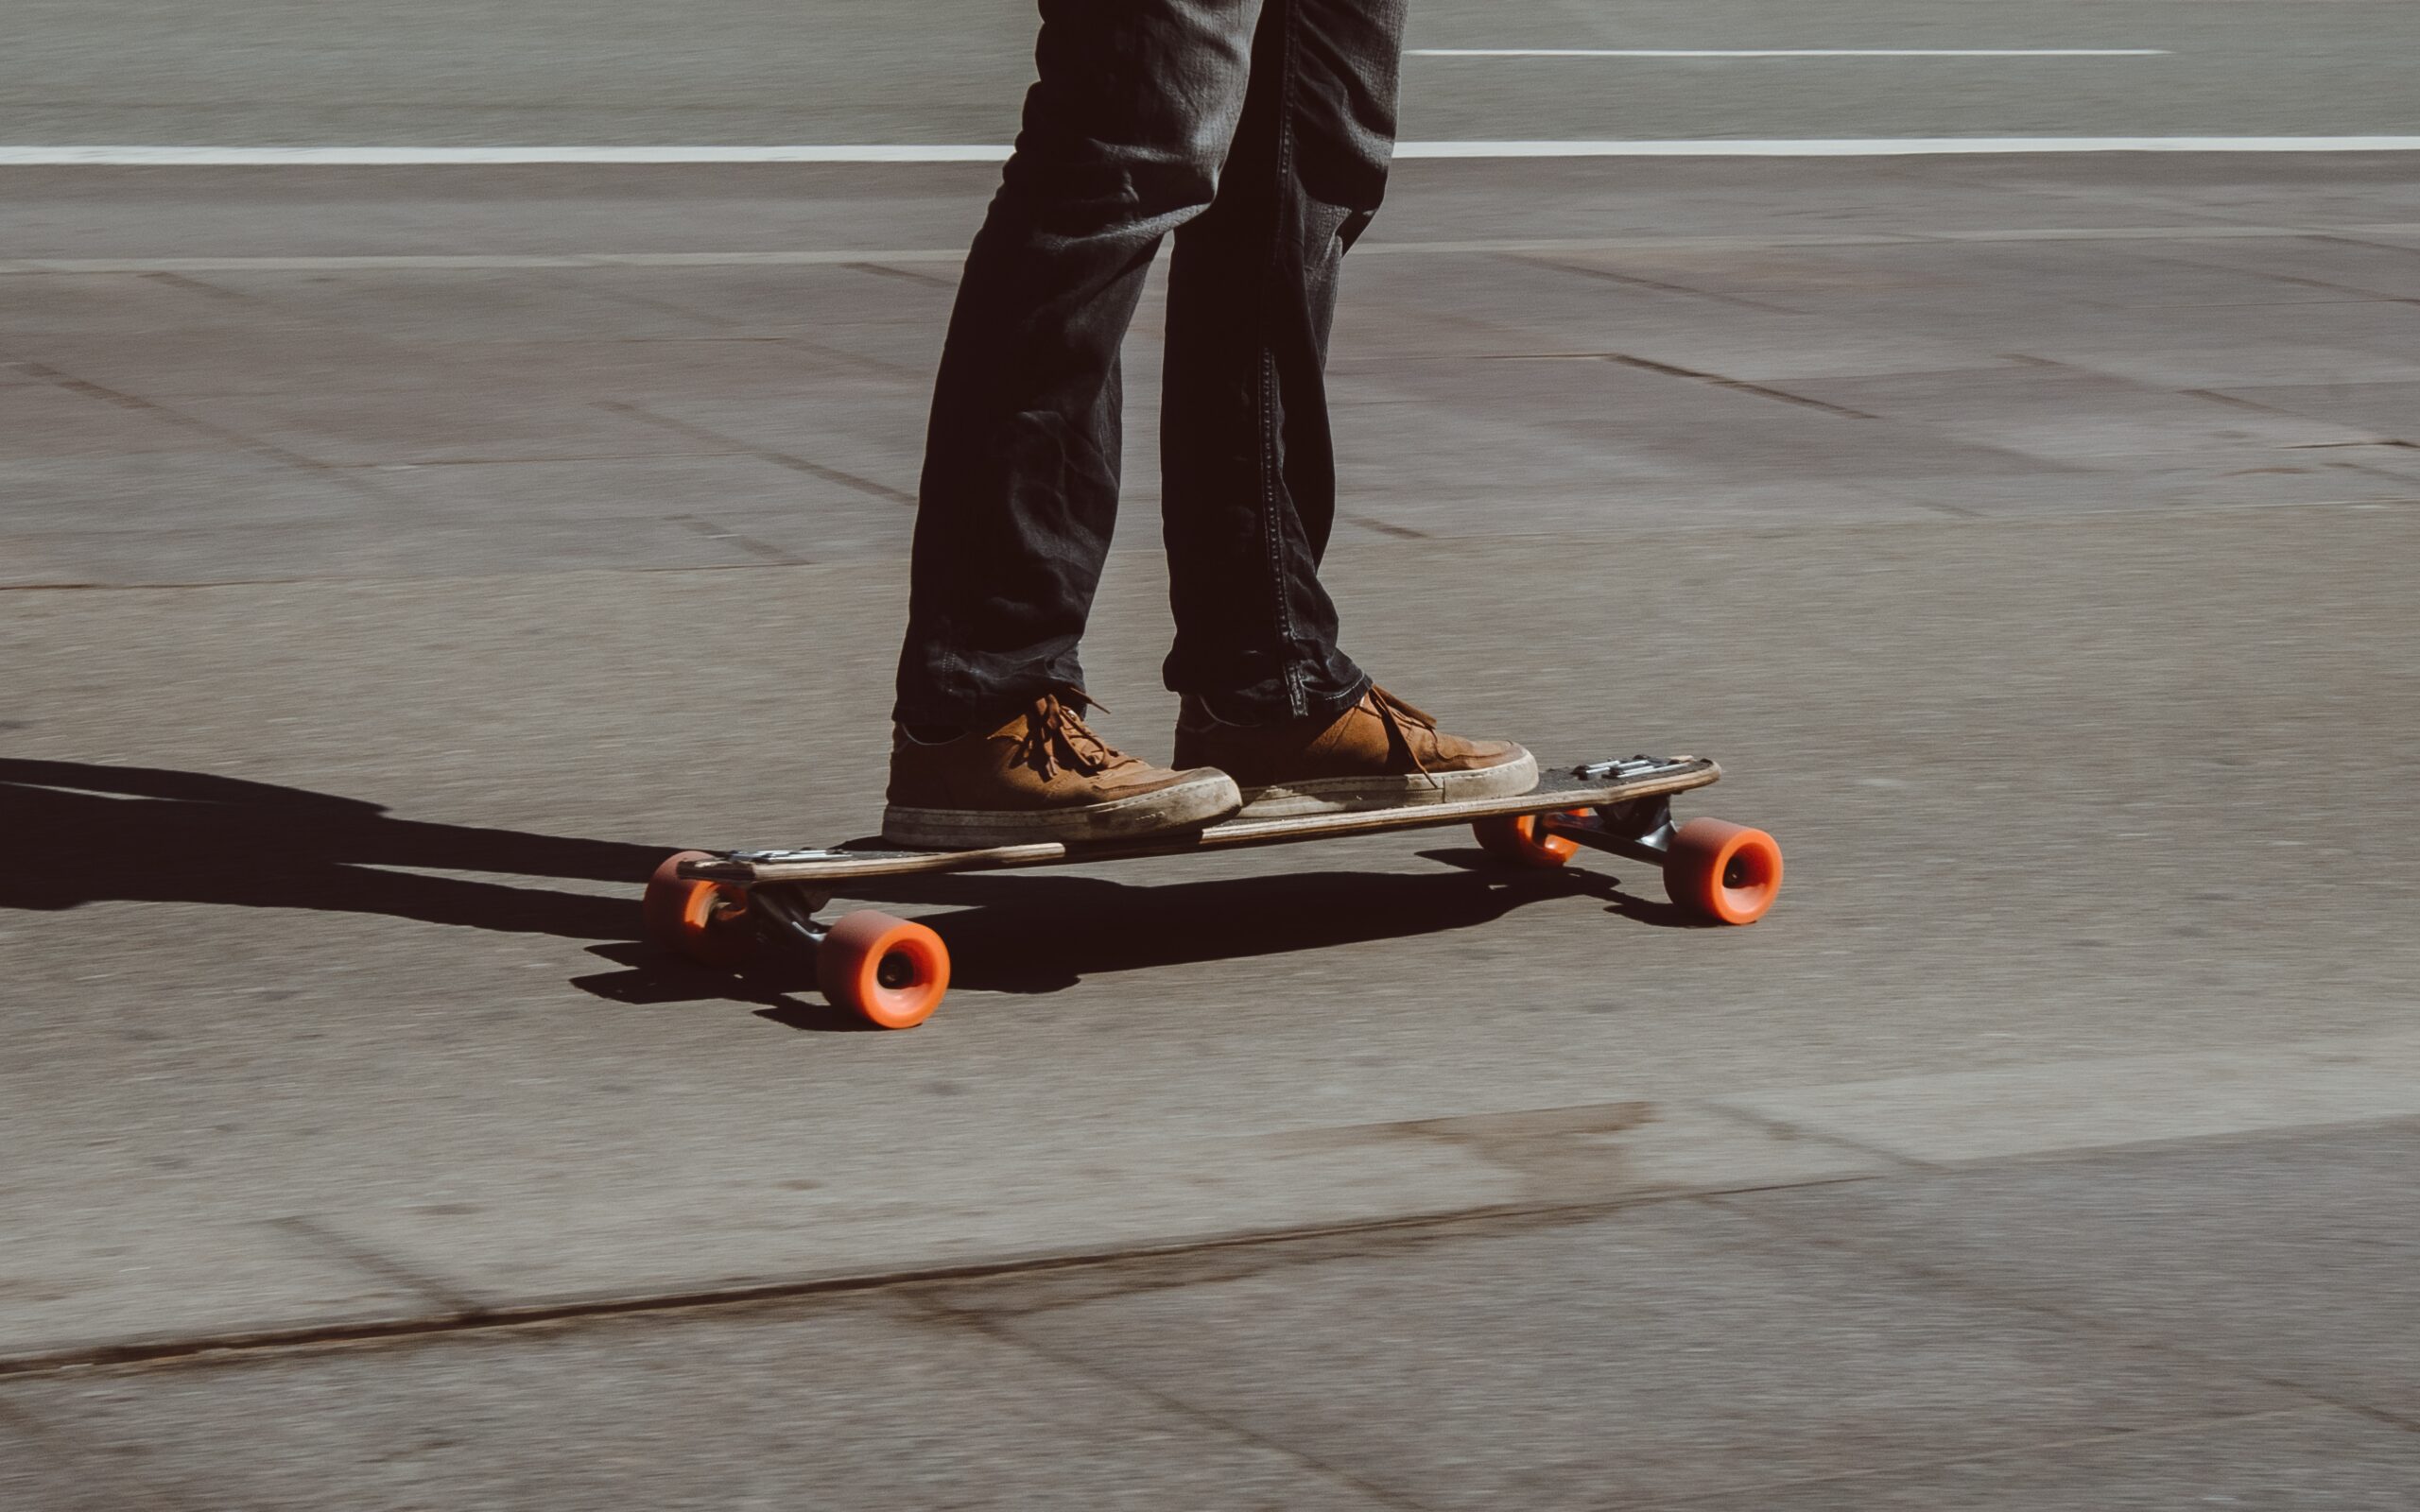 How Do I Adjust My Skateboard Deck Width For Better Stability?